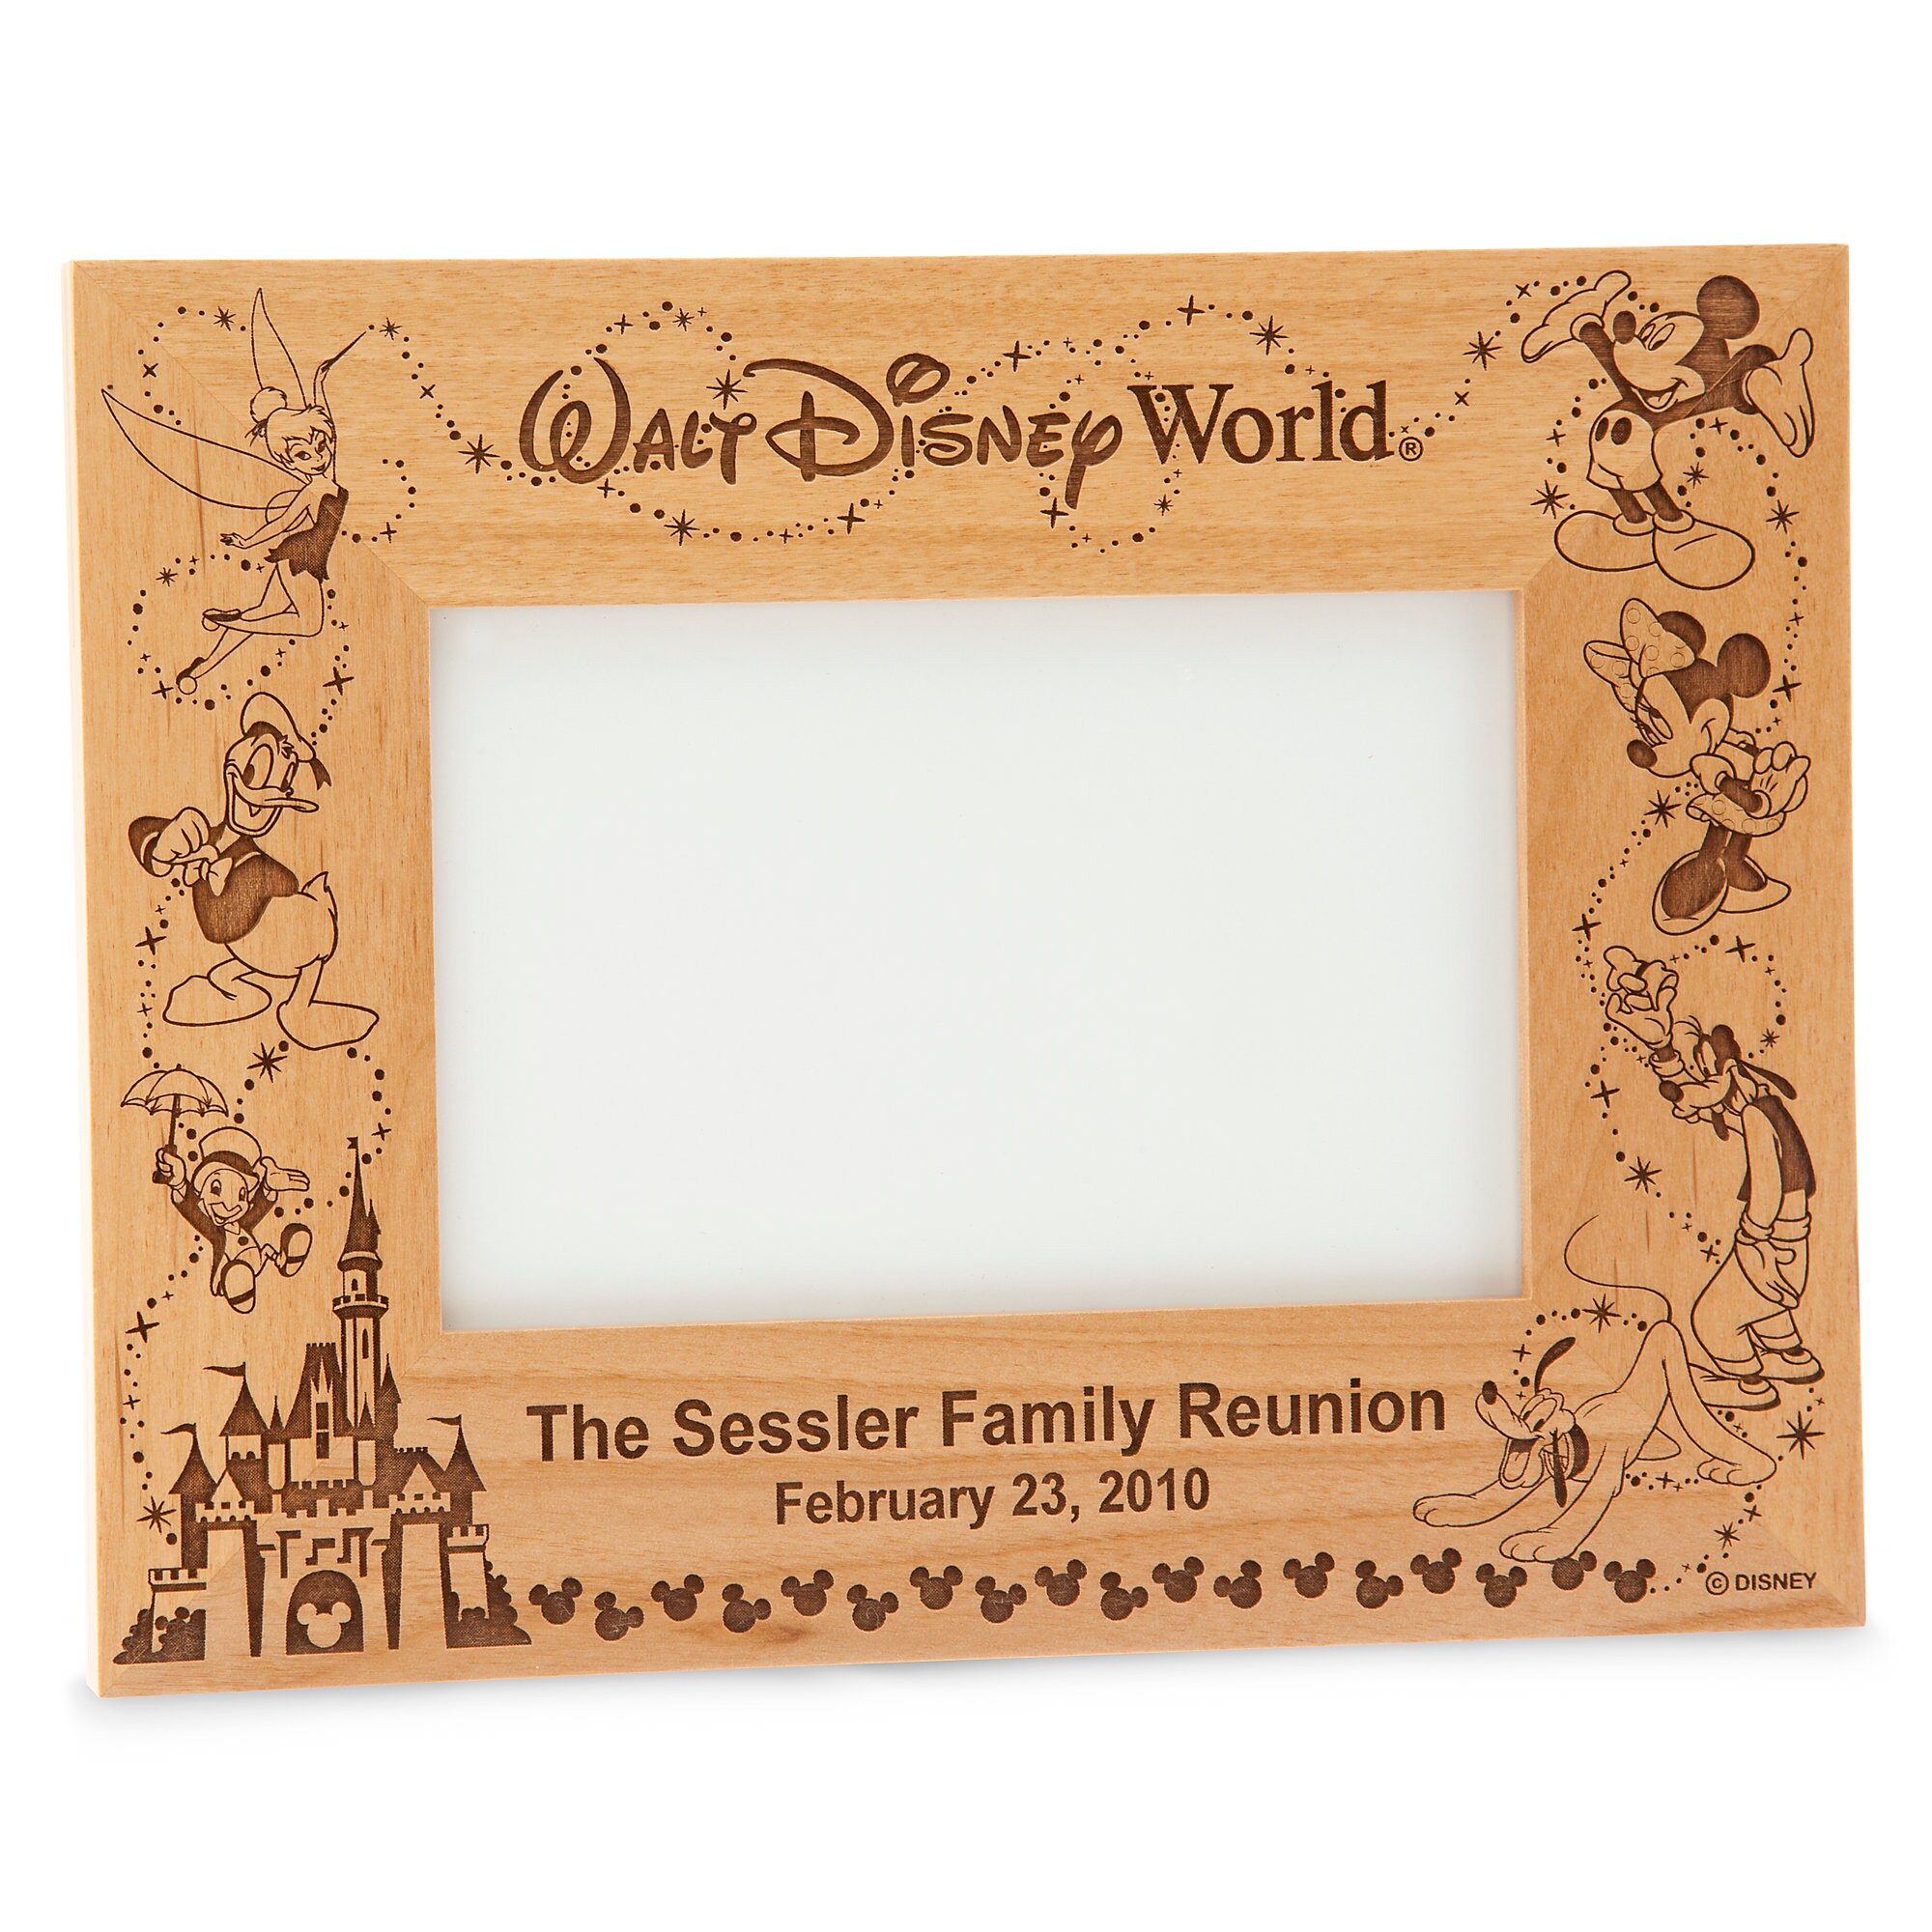 Walt Disney World Cinderella Castle Frame by Arribas - Personalizable